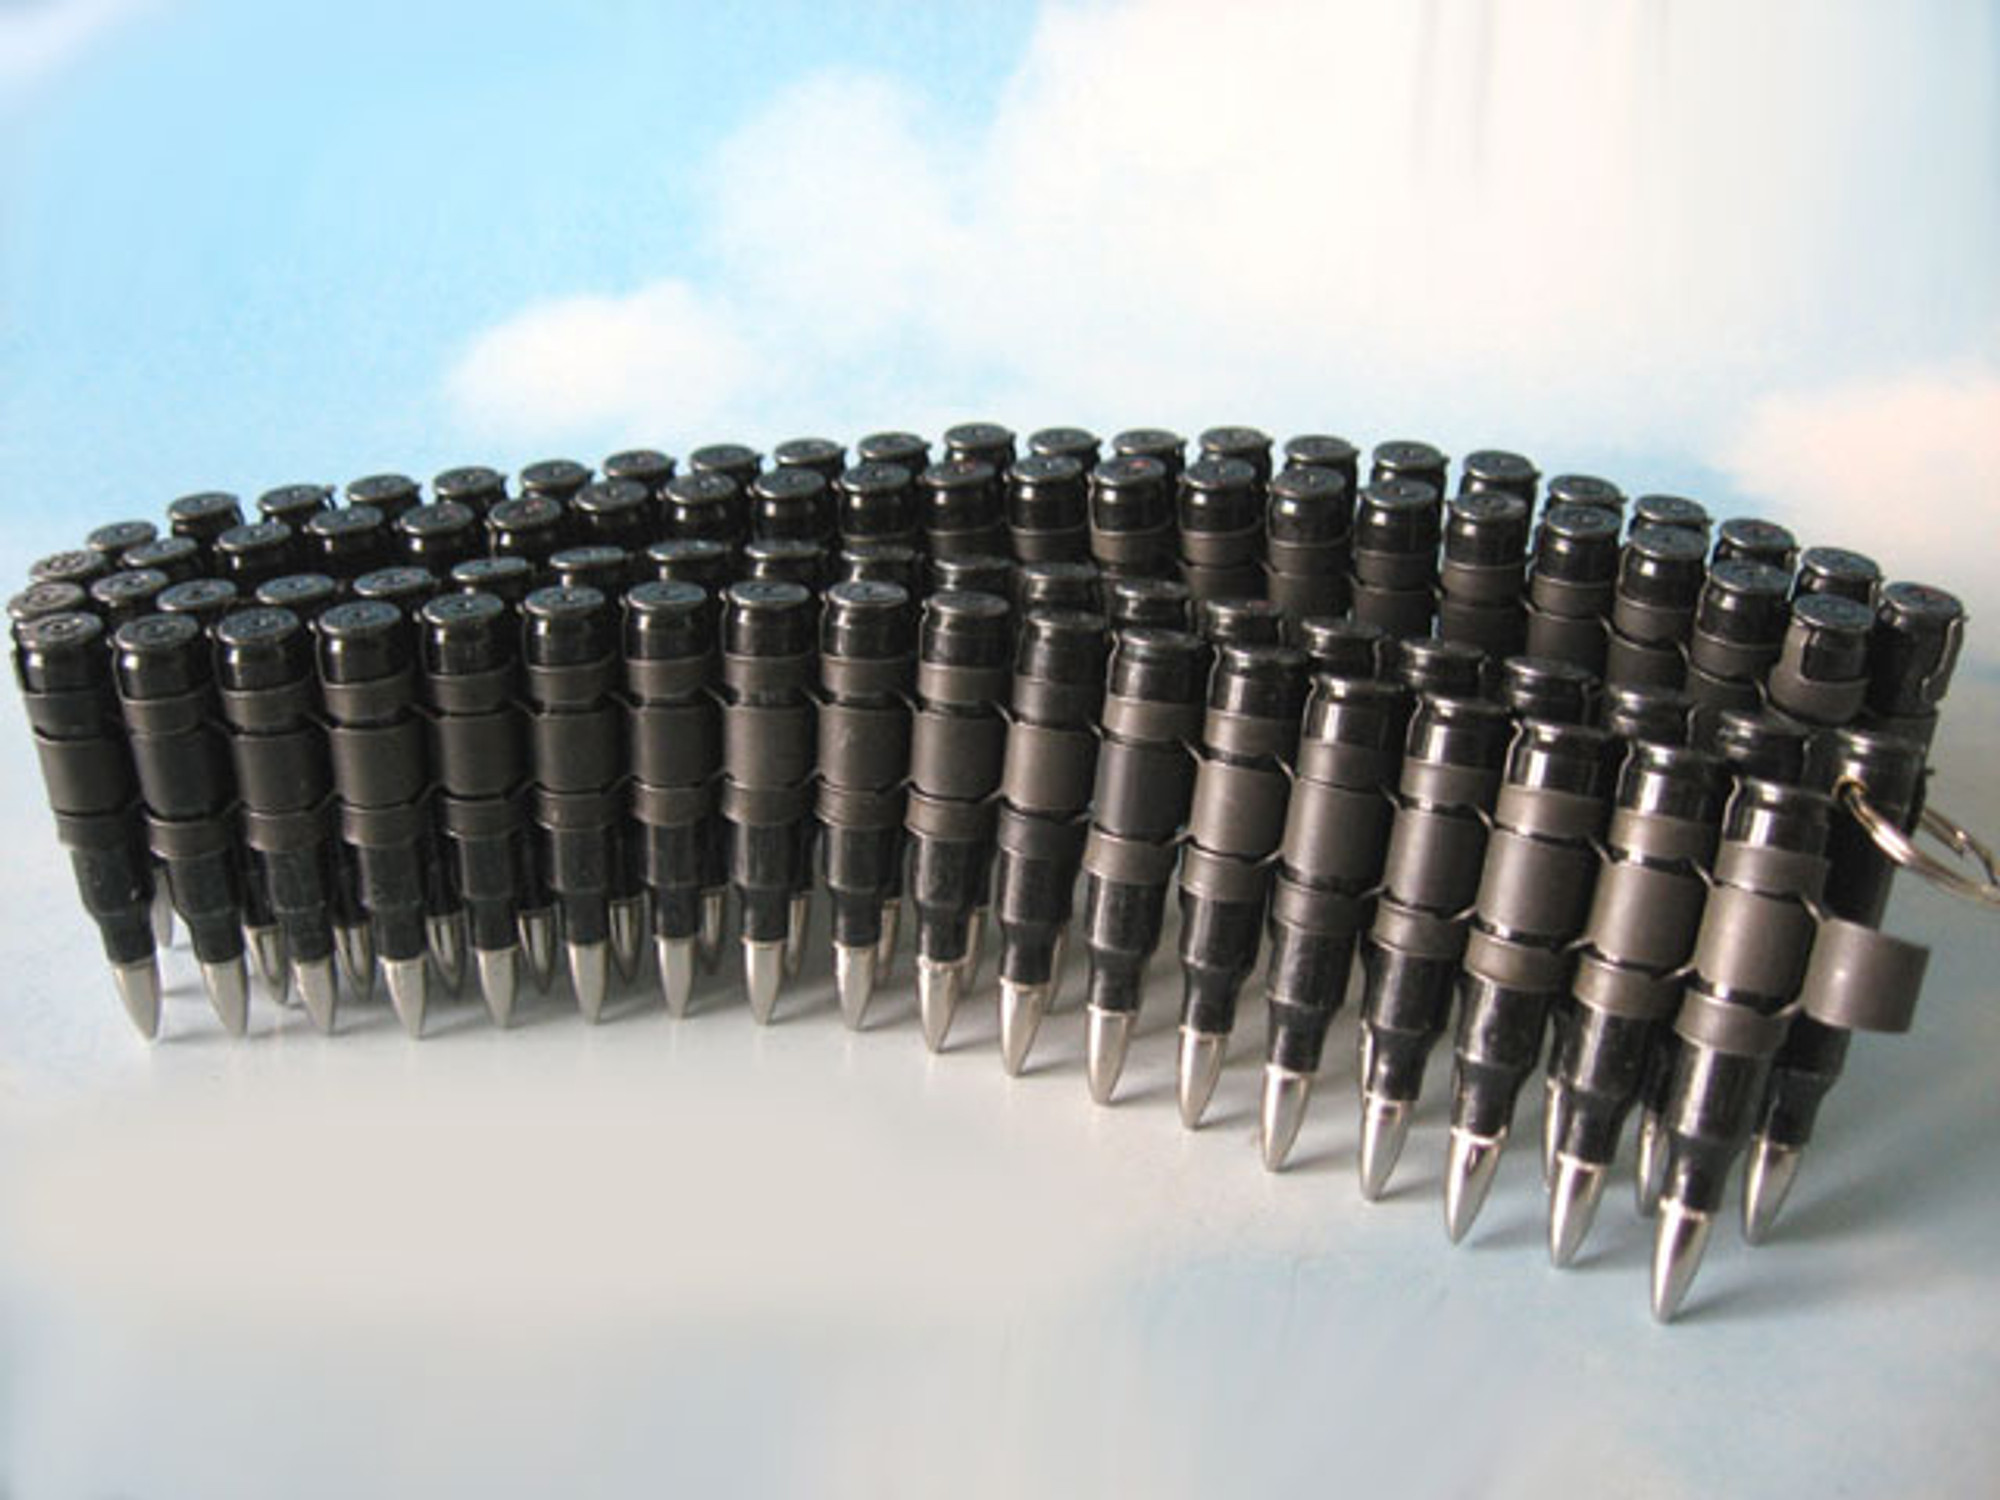 Bullet Belt 5.56 mm - Black Casings & Black Links